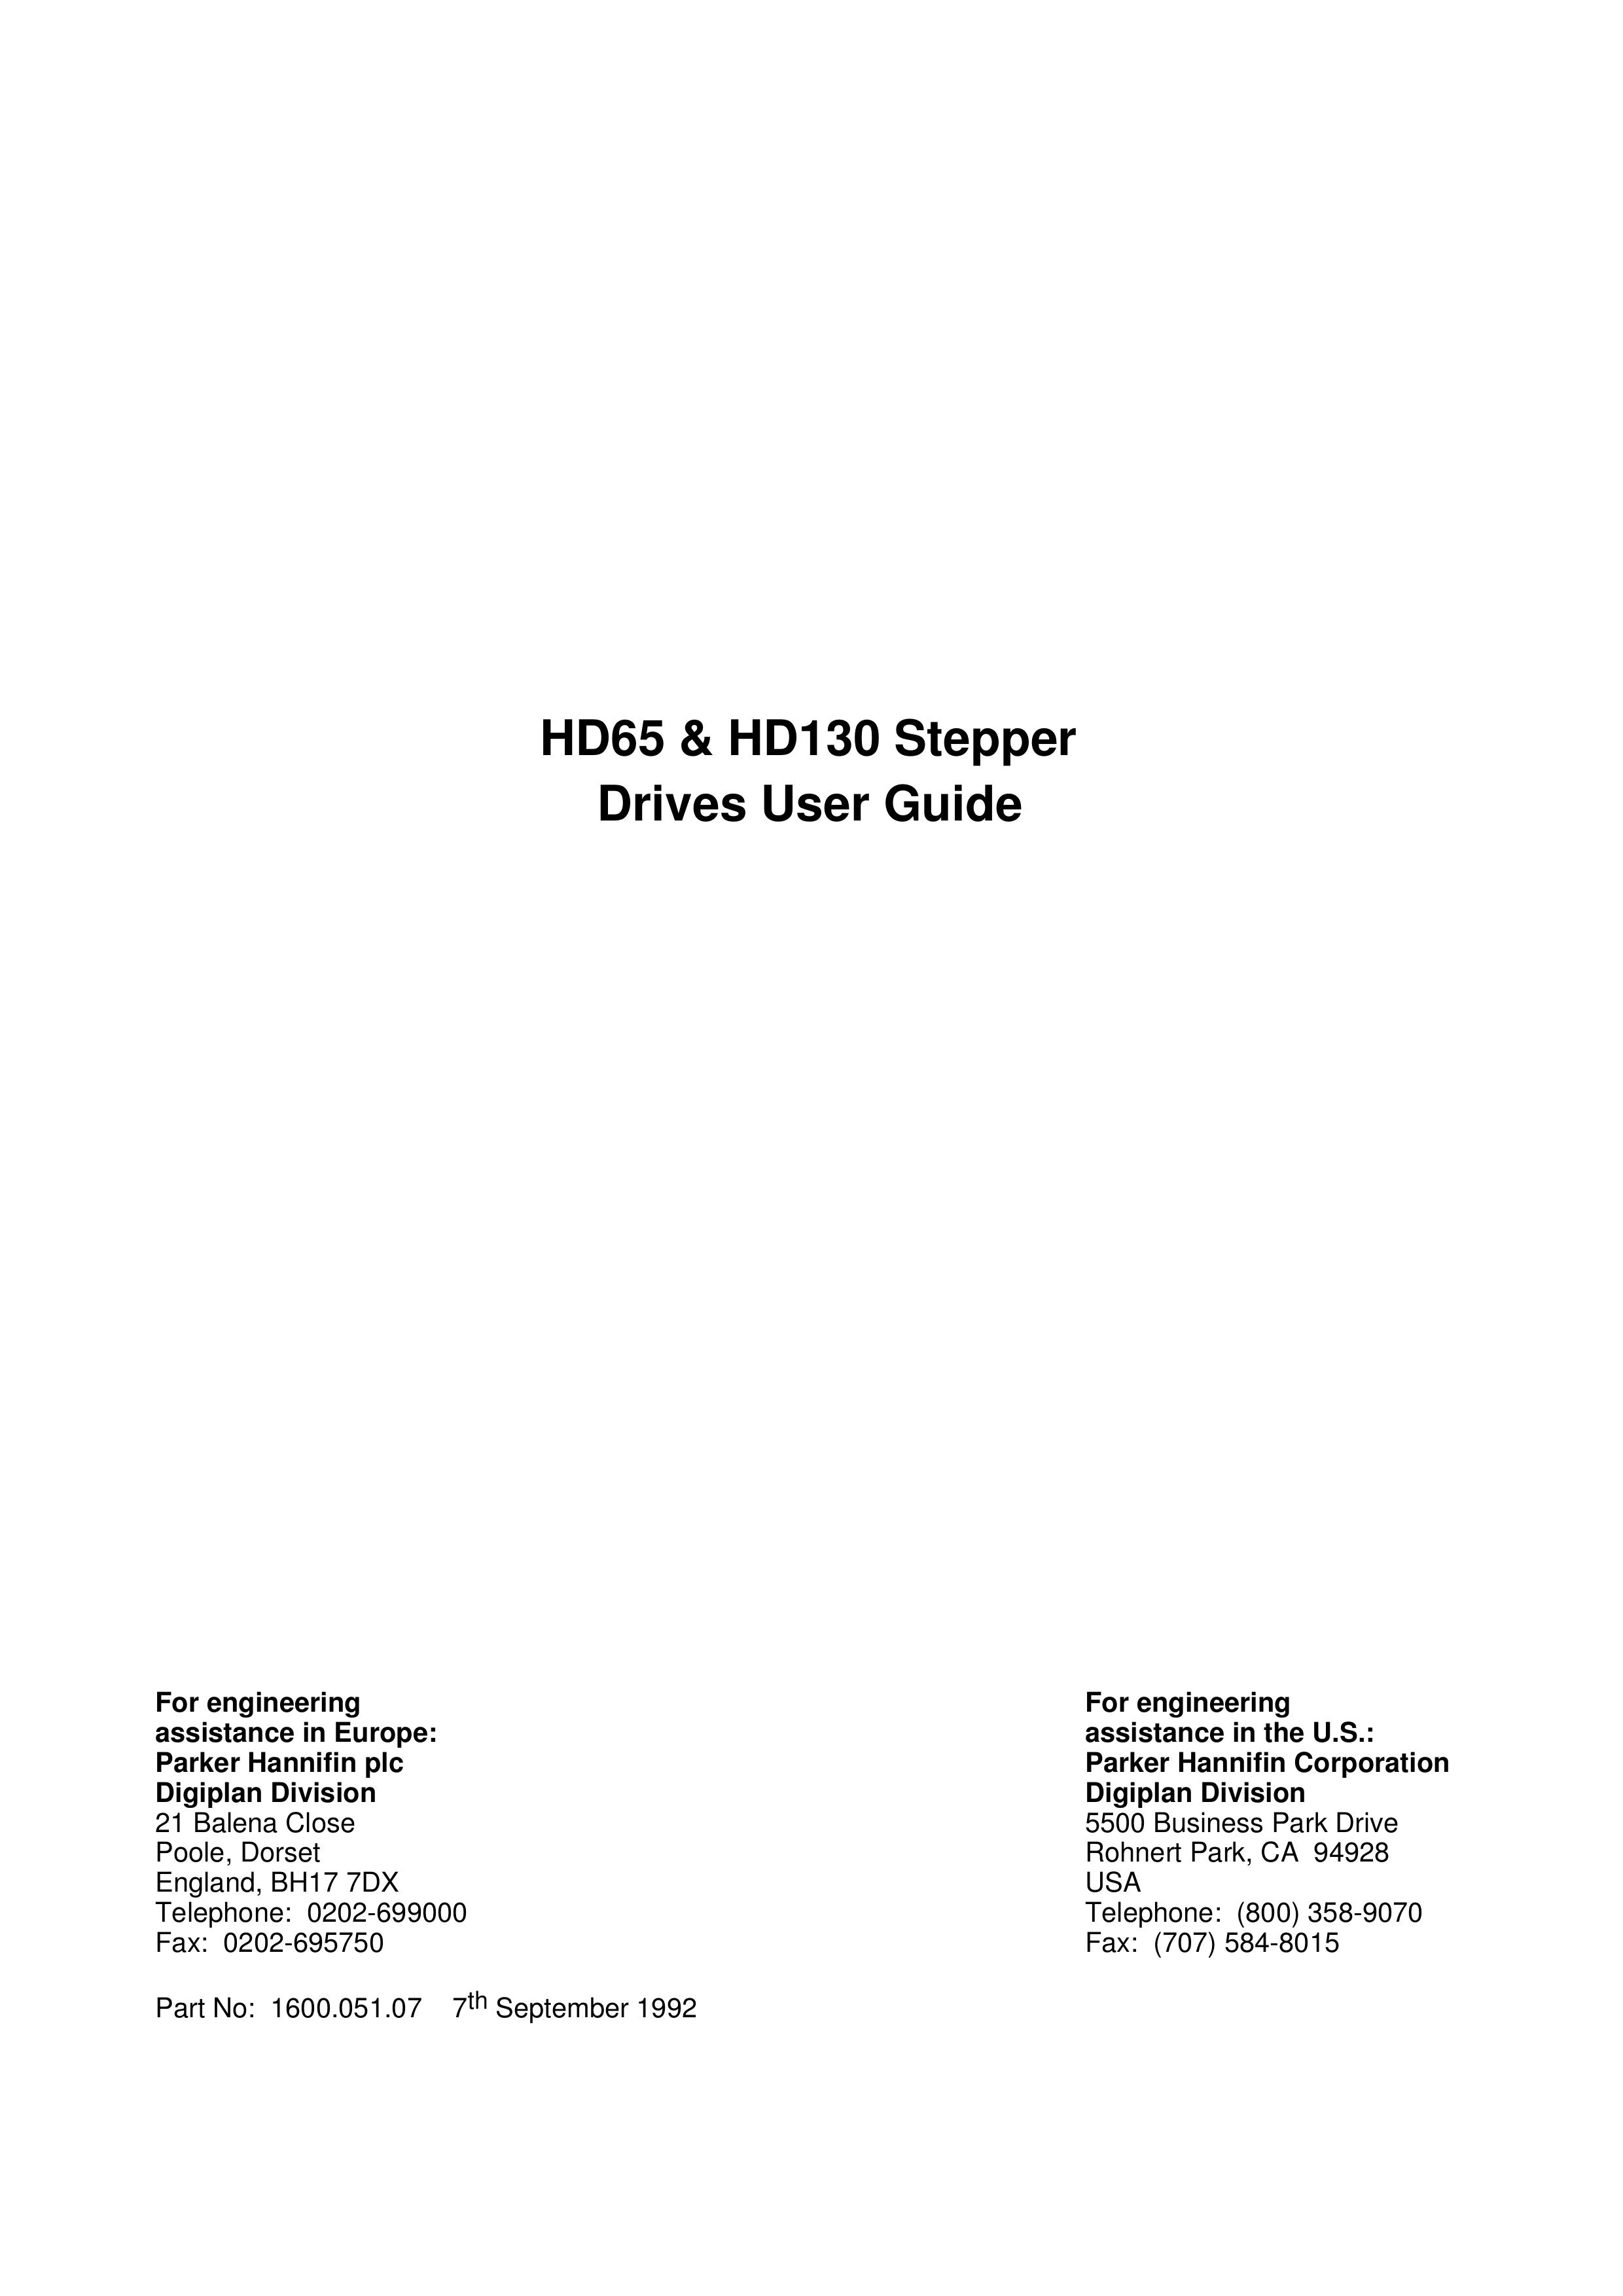 Parker Hannifin HD130 Outboard Motor User Manual